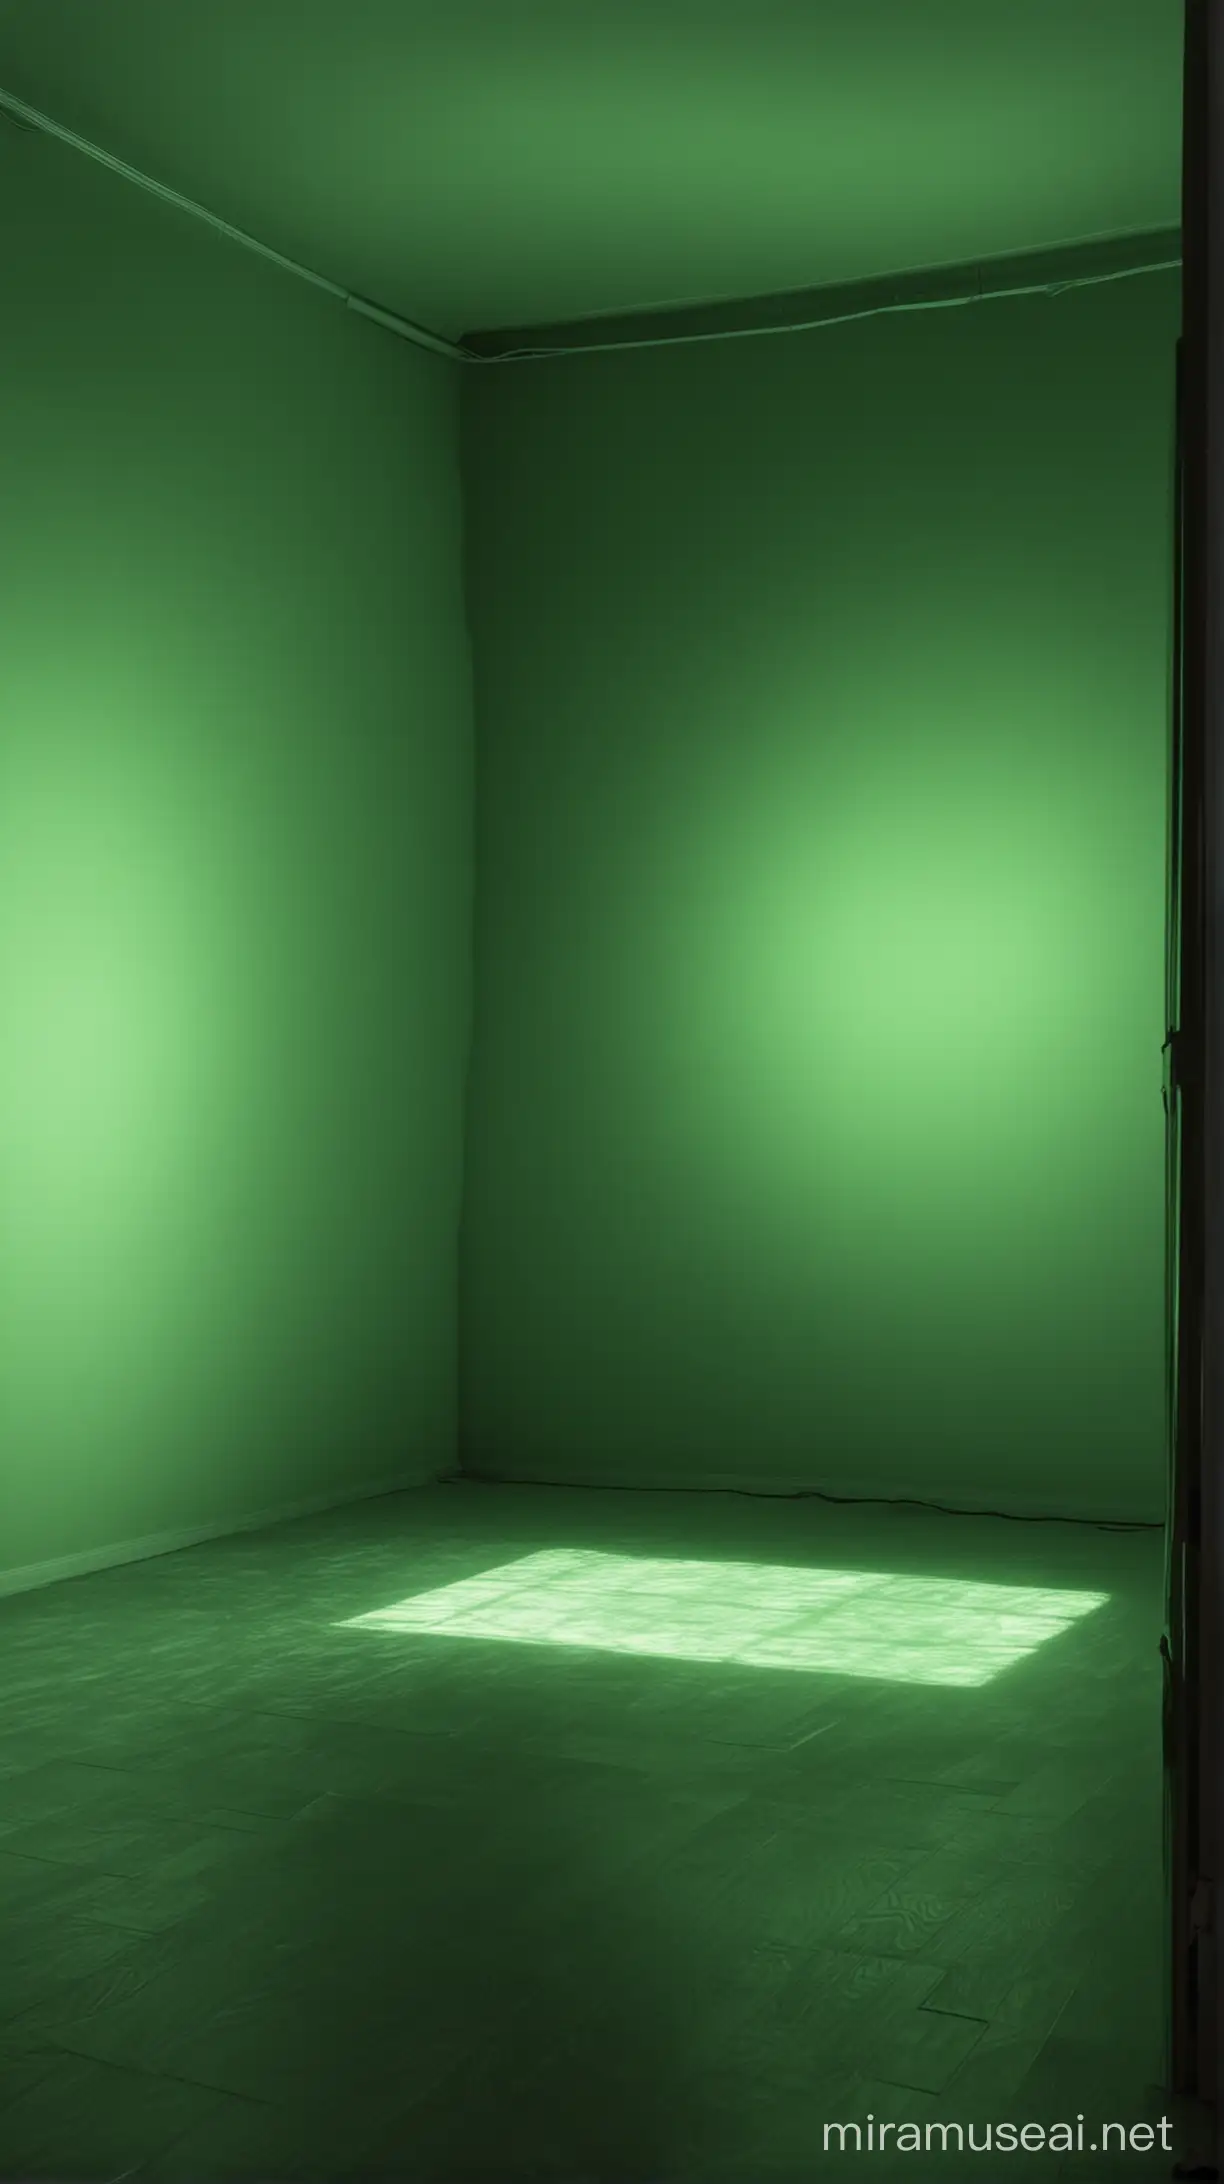 Surreal Green Glow Illuminating Room Interior